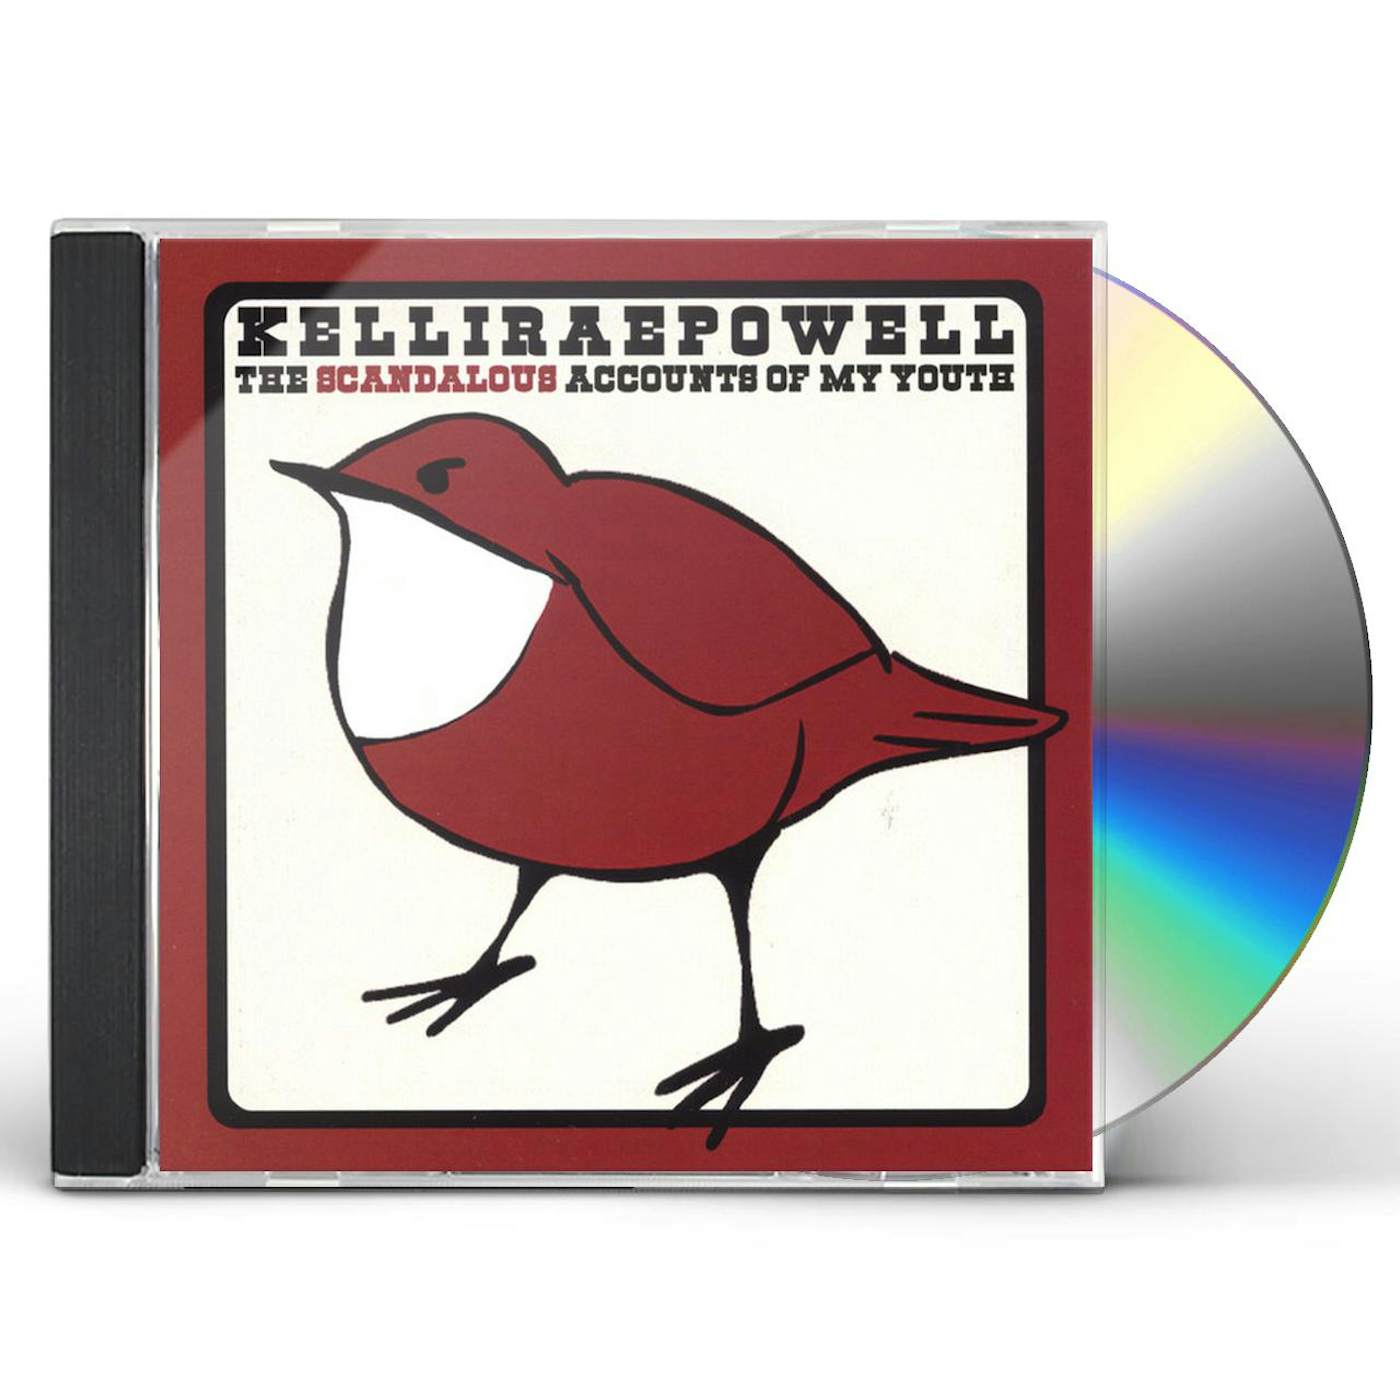 Kelli Rae Powell SCANDALOUS ACCOUNTS OF MY YOUTH CD